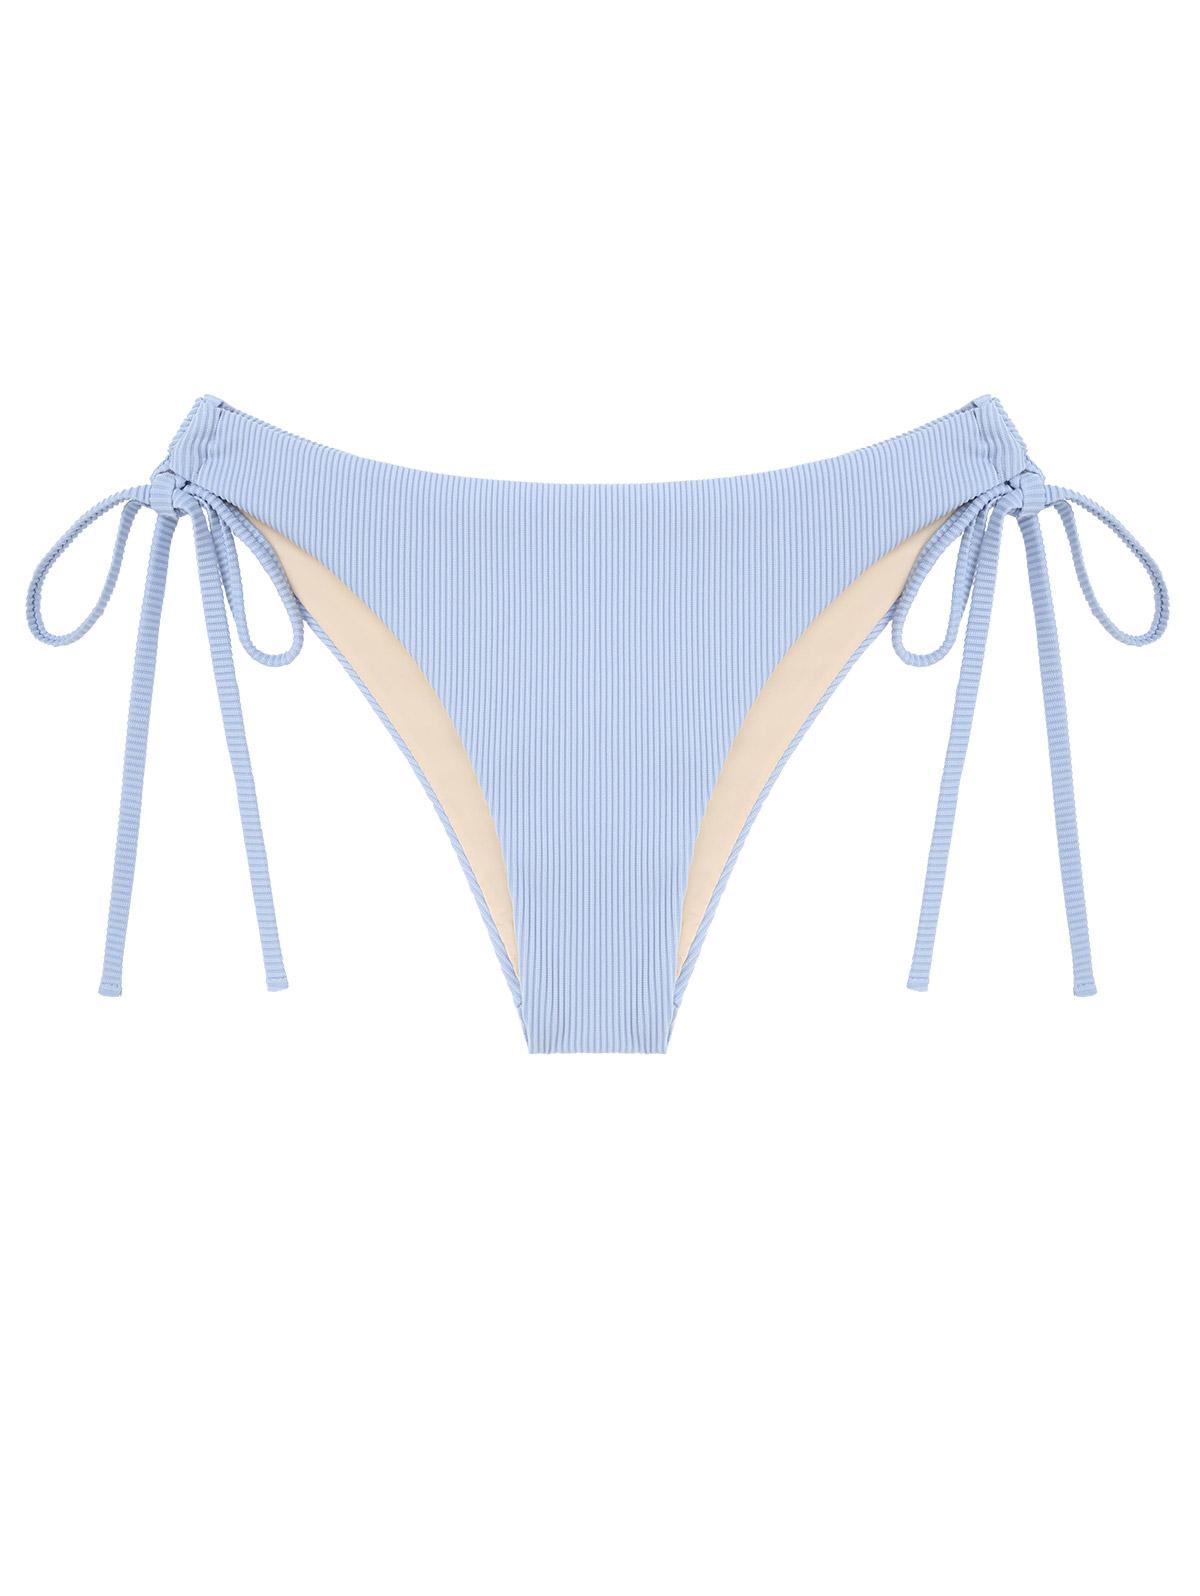 ZAFUL Cinched Textured Bikini Bottom L Light blue